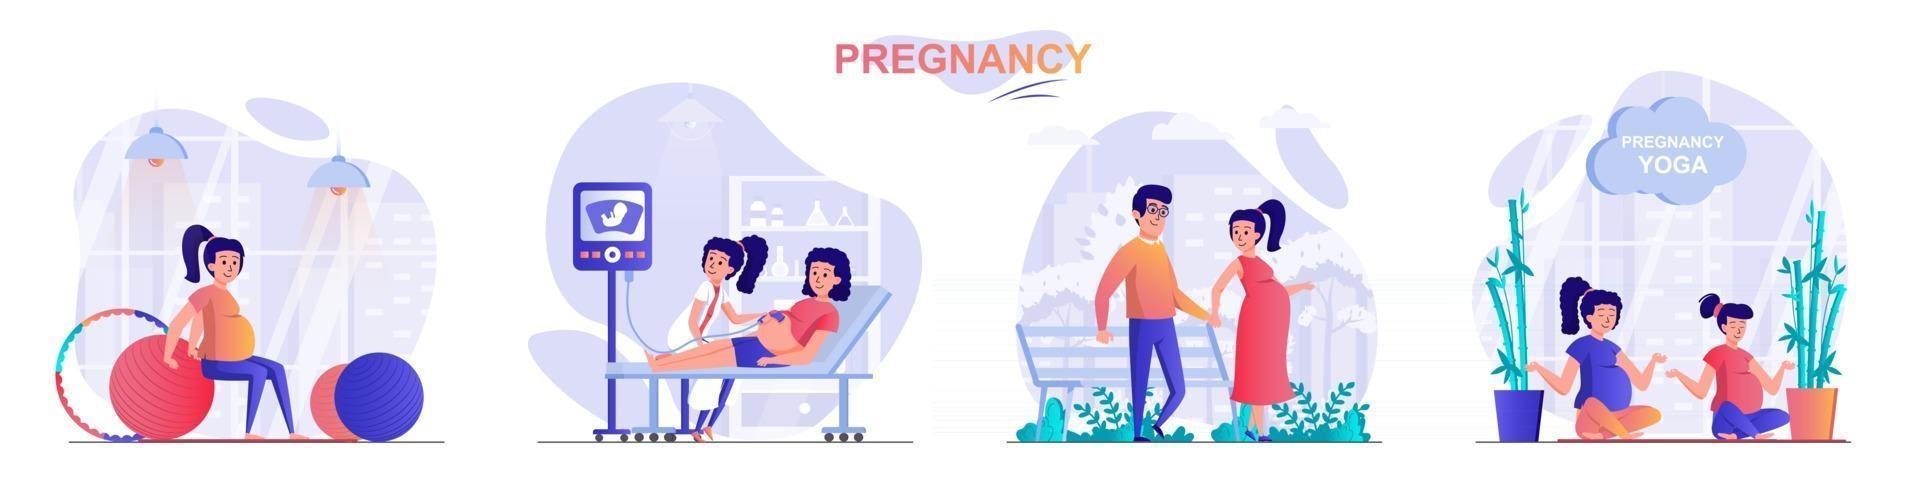 Pregnancy concept scenes set vector